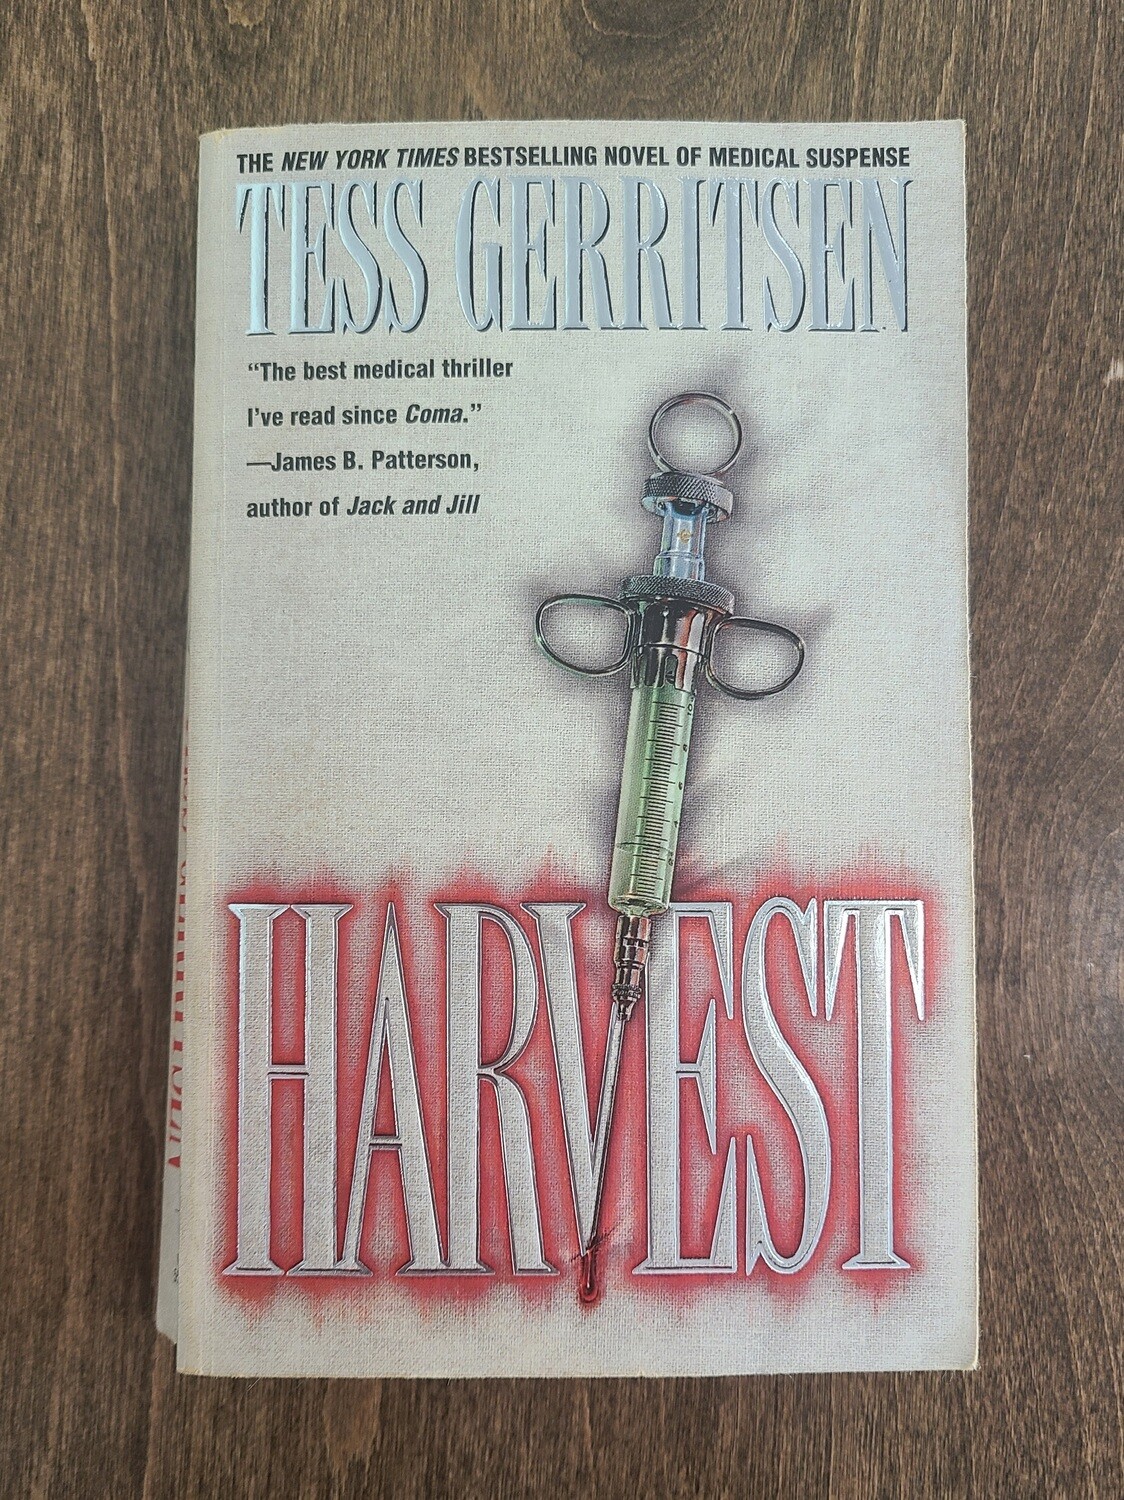 Harvest by Tess Gerristen